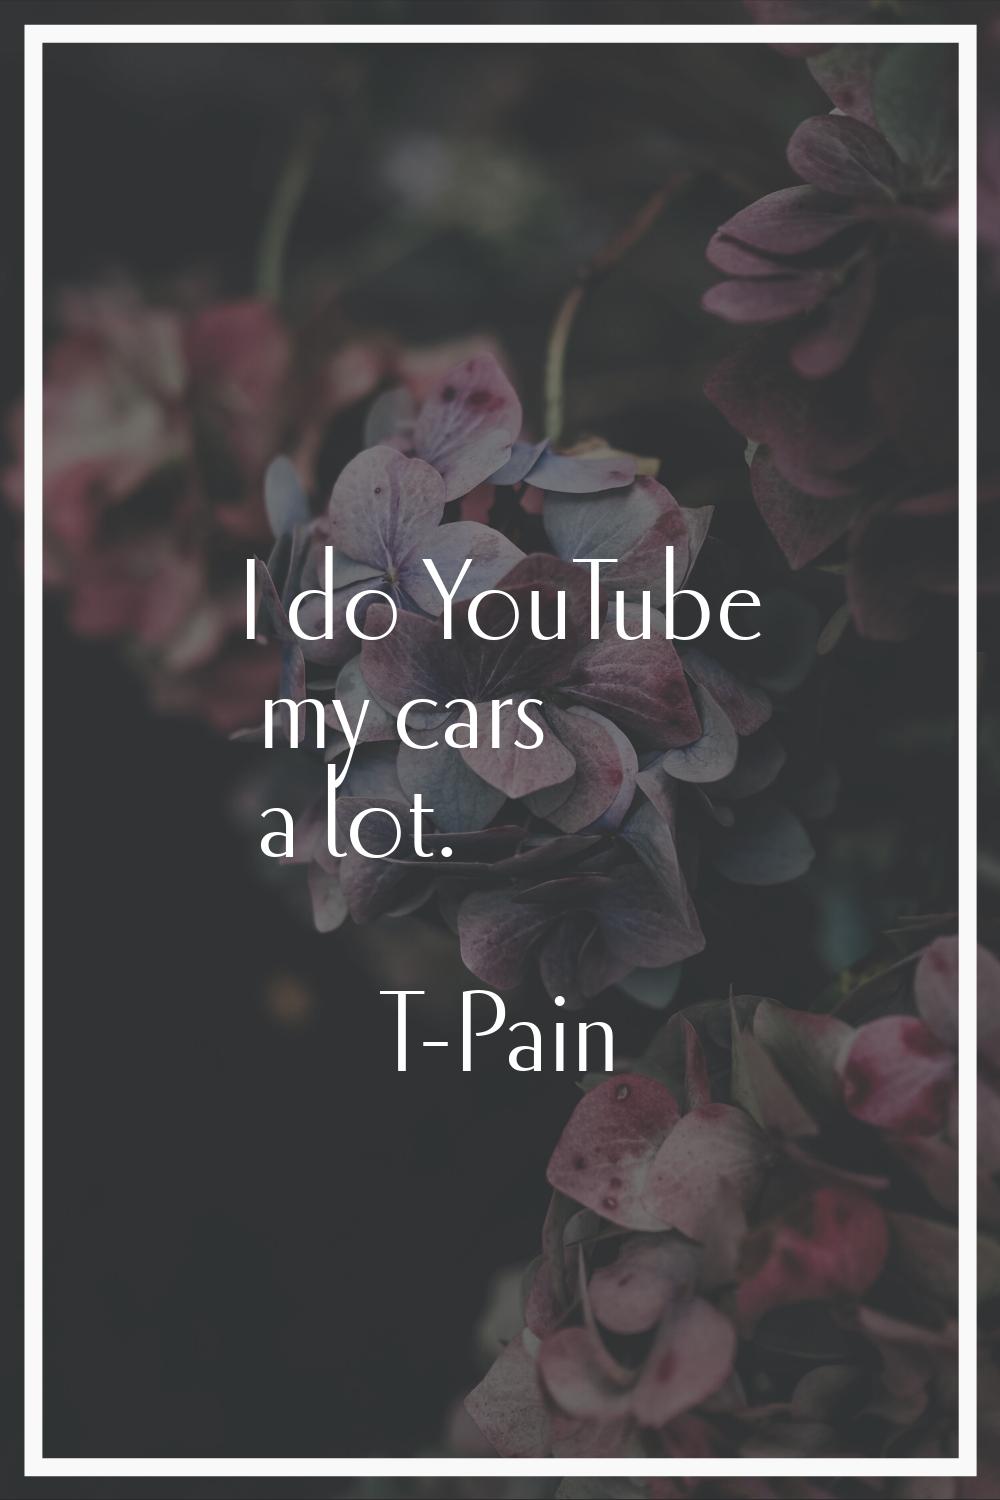 I do YouTube my cars a lot.